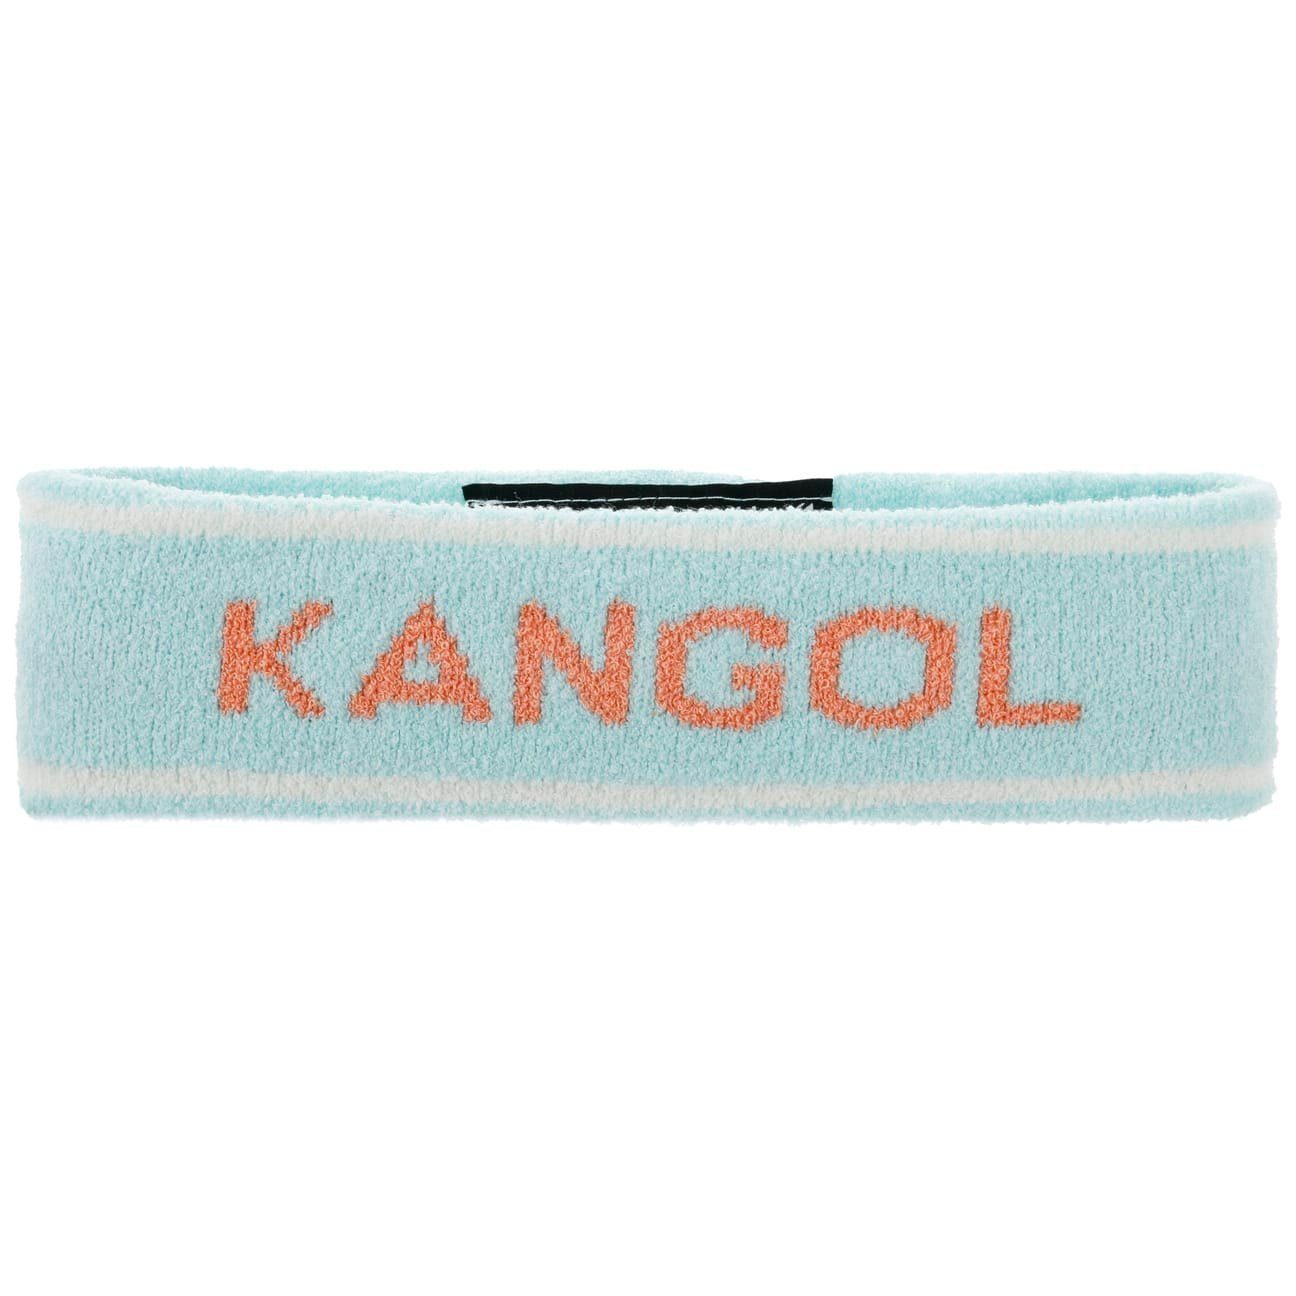 Kangol Stirnband (1-St) Stirnband